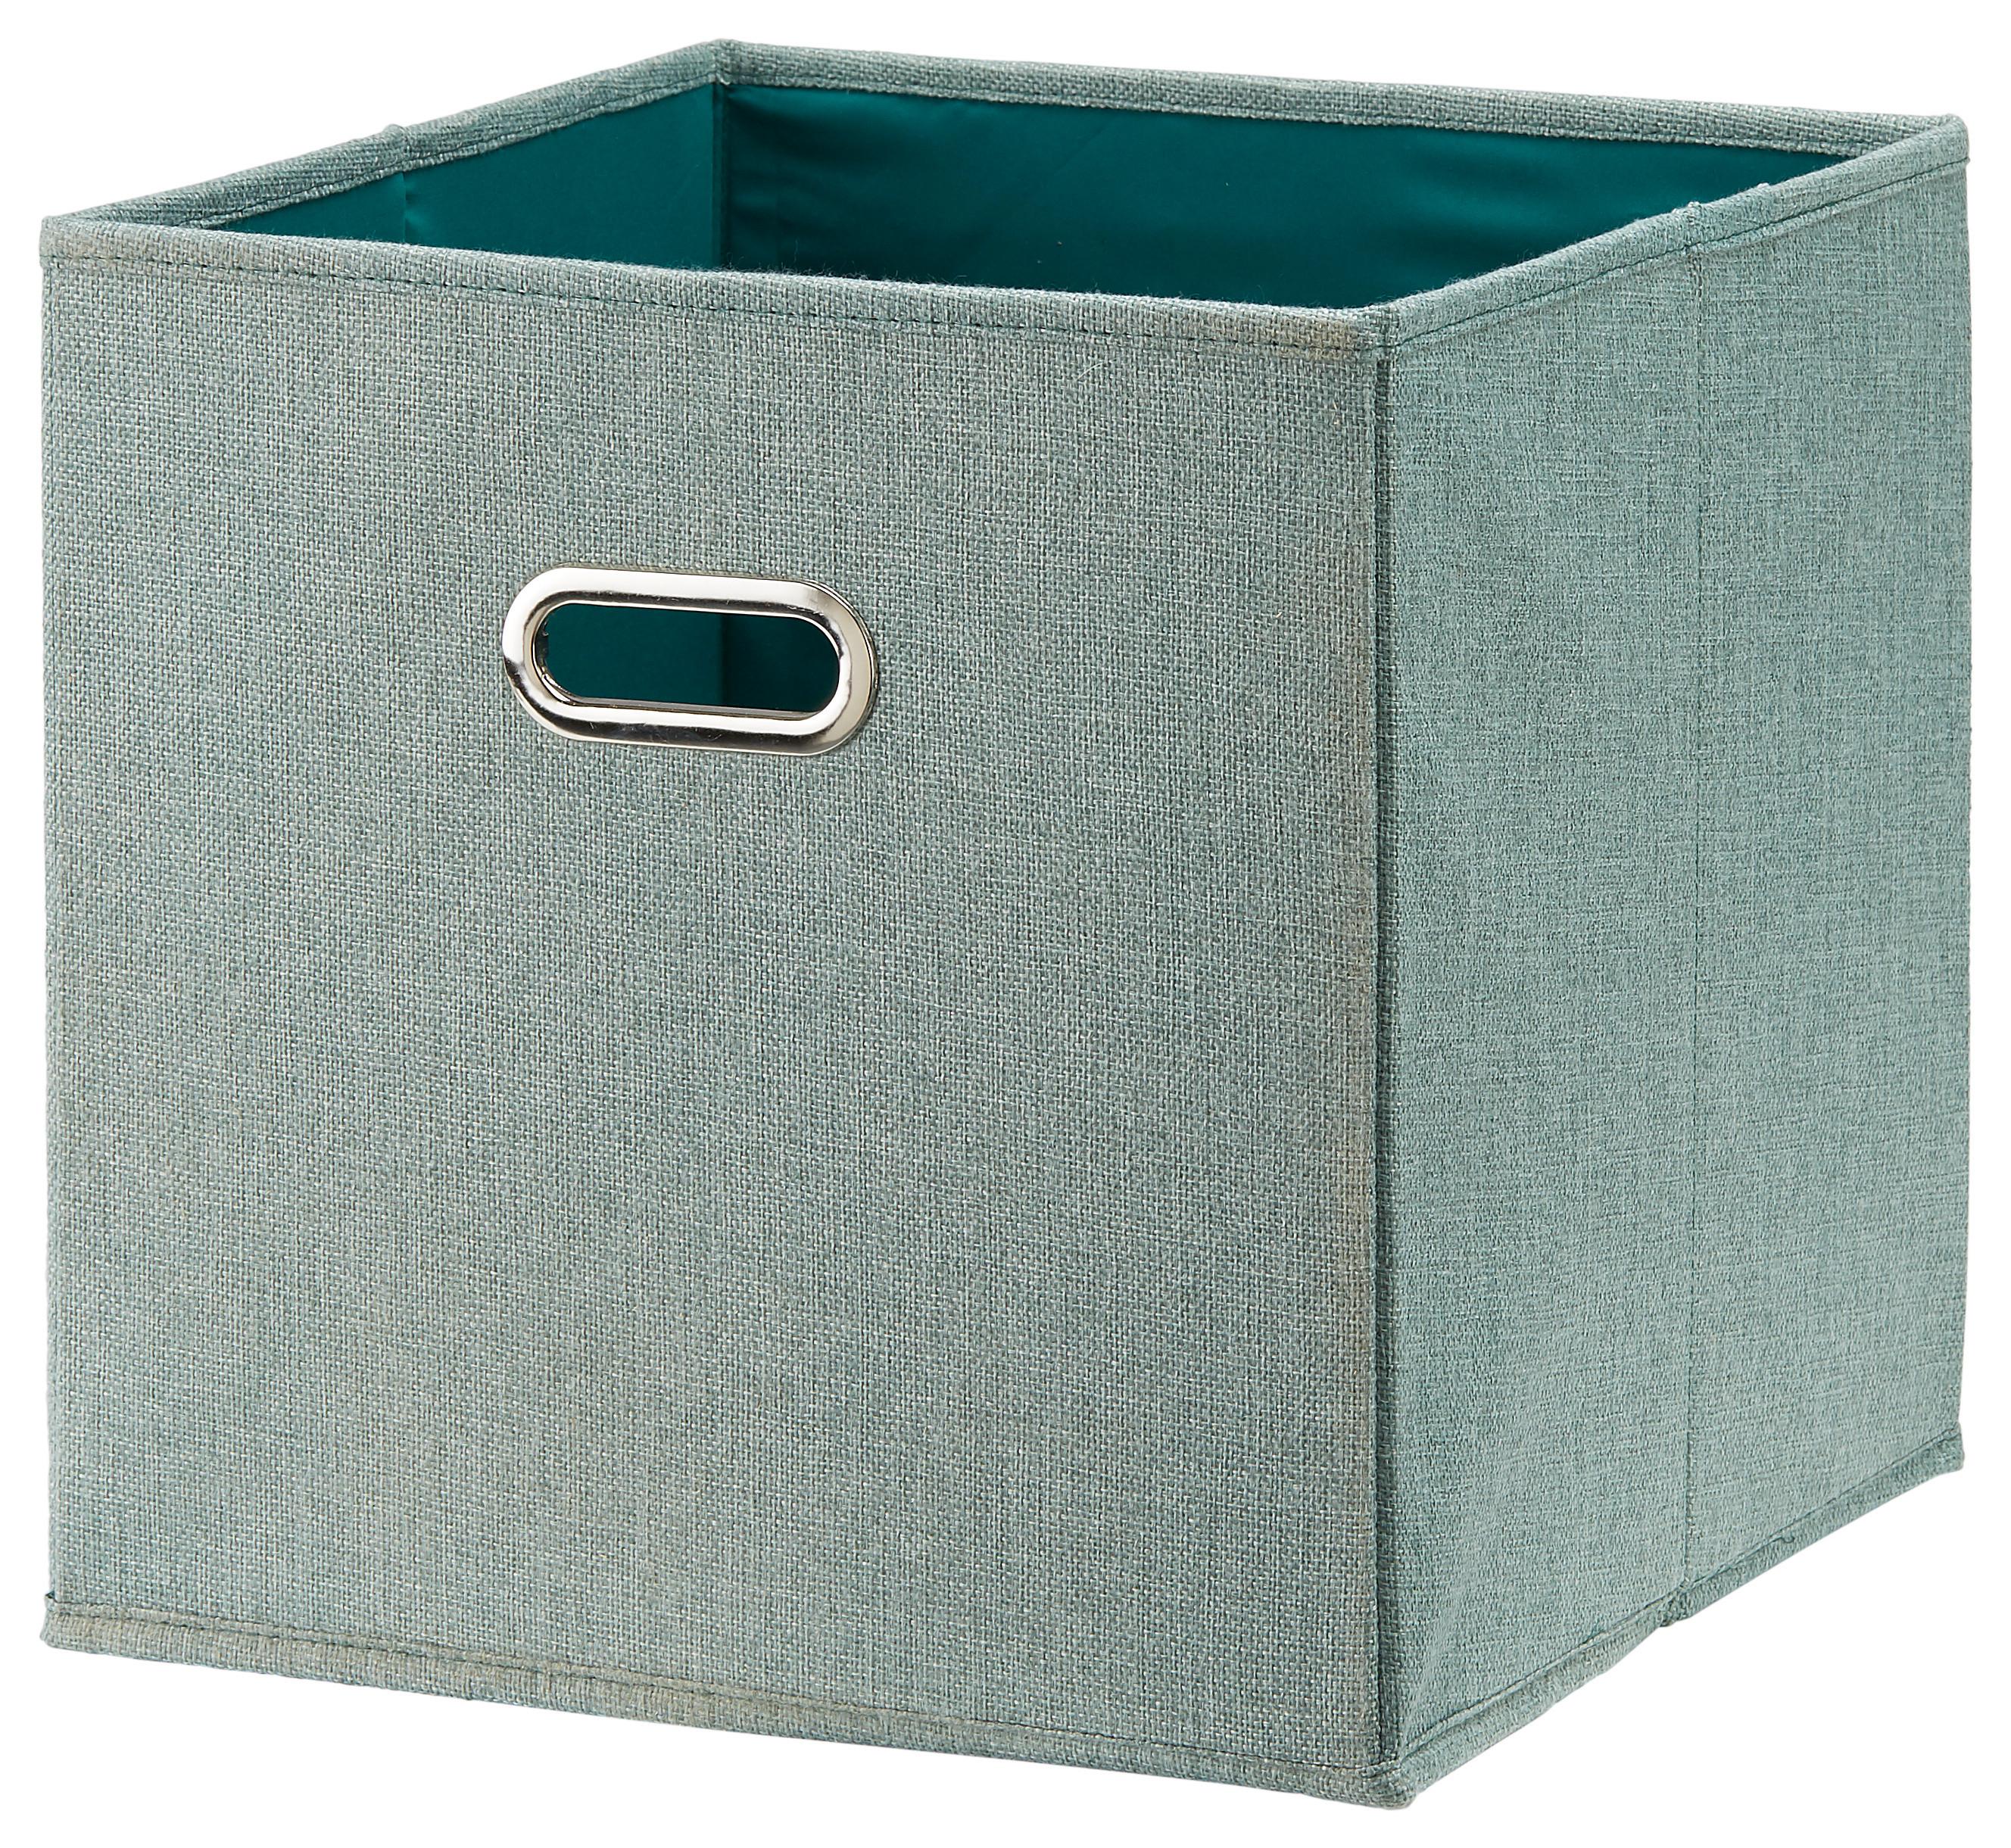 Skládací Krabice Bobby - Ca. 34l -Ext- -Akt- - zelená, Moderní, karton/textil (33/32/33cm) - Premium Living